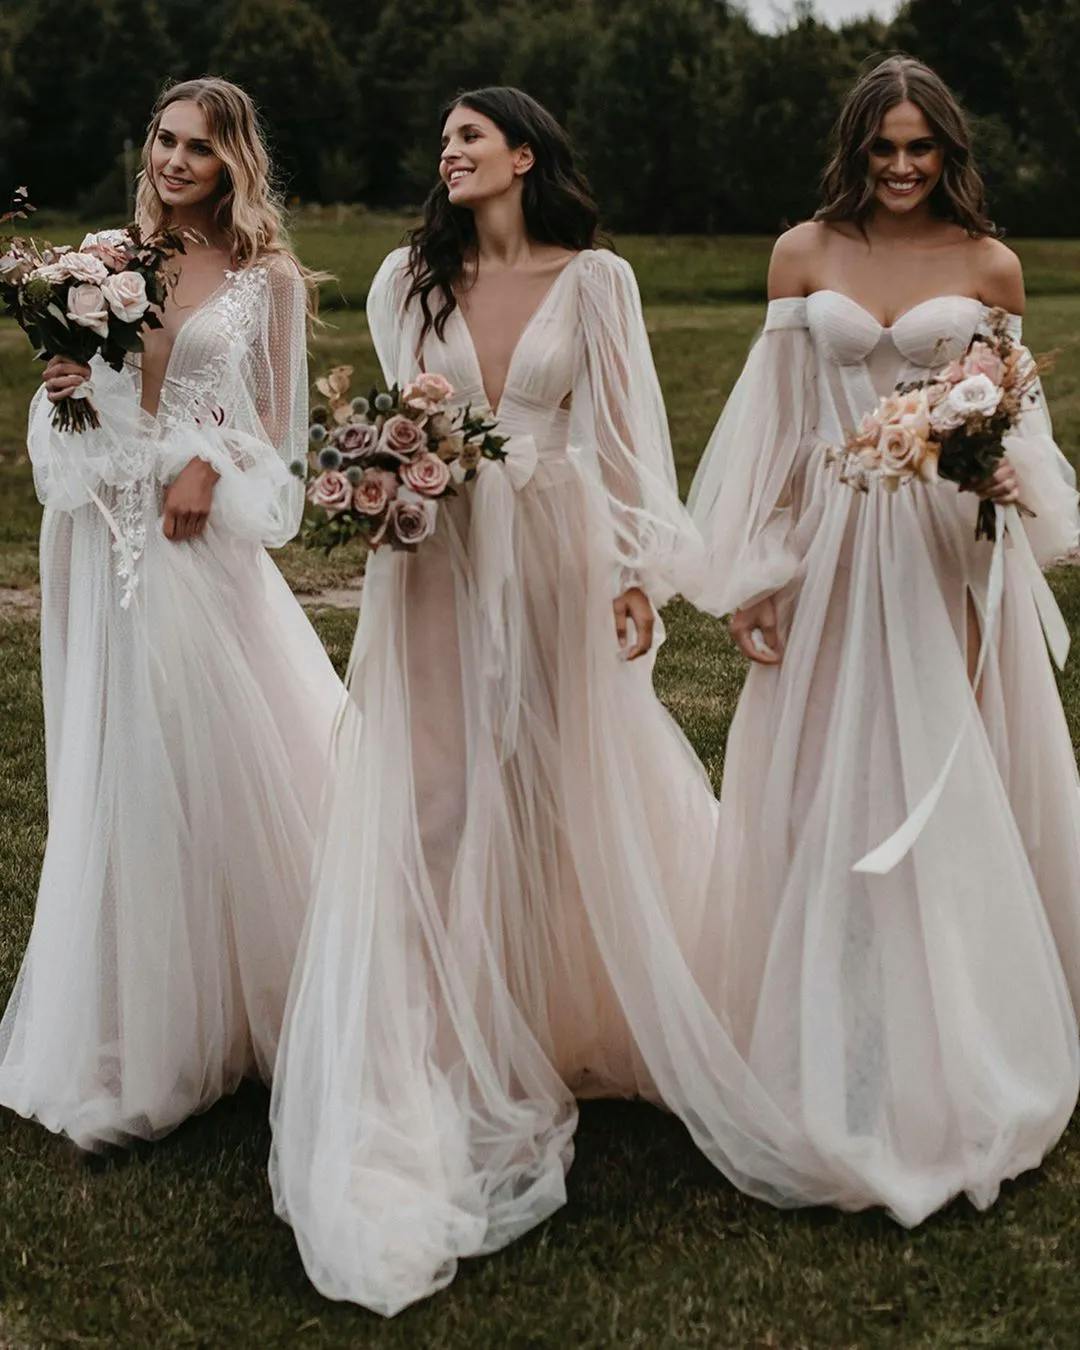 3 brides wearing flowing wedding dresses